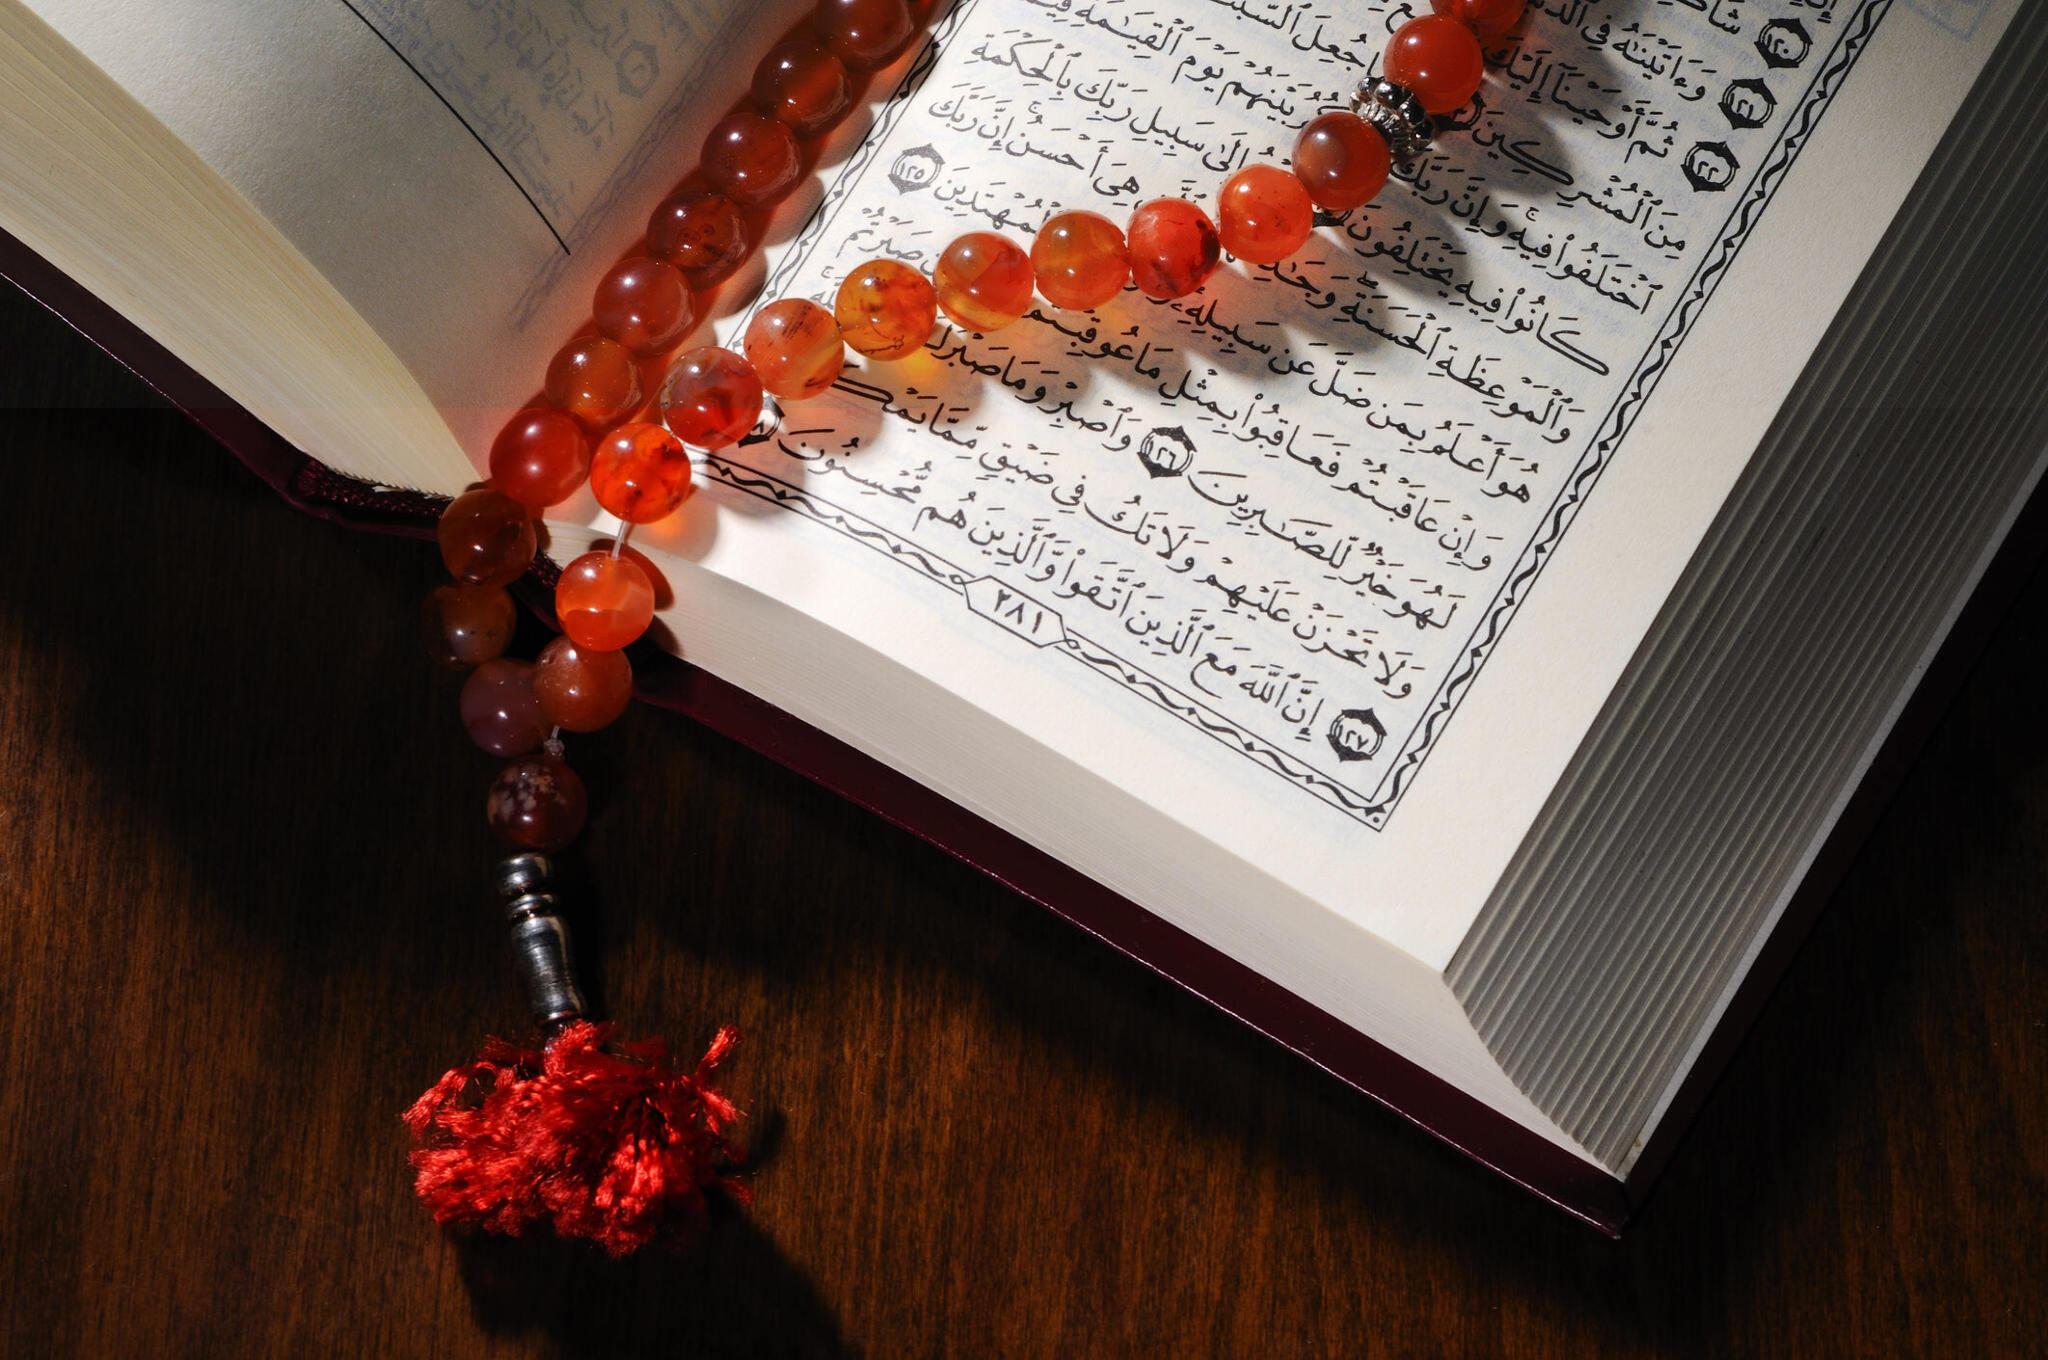 What Surah should a person read for Jummah?